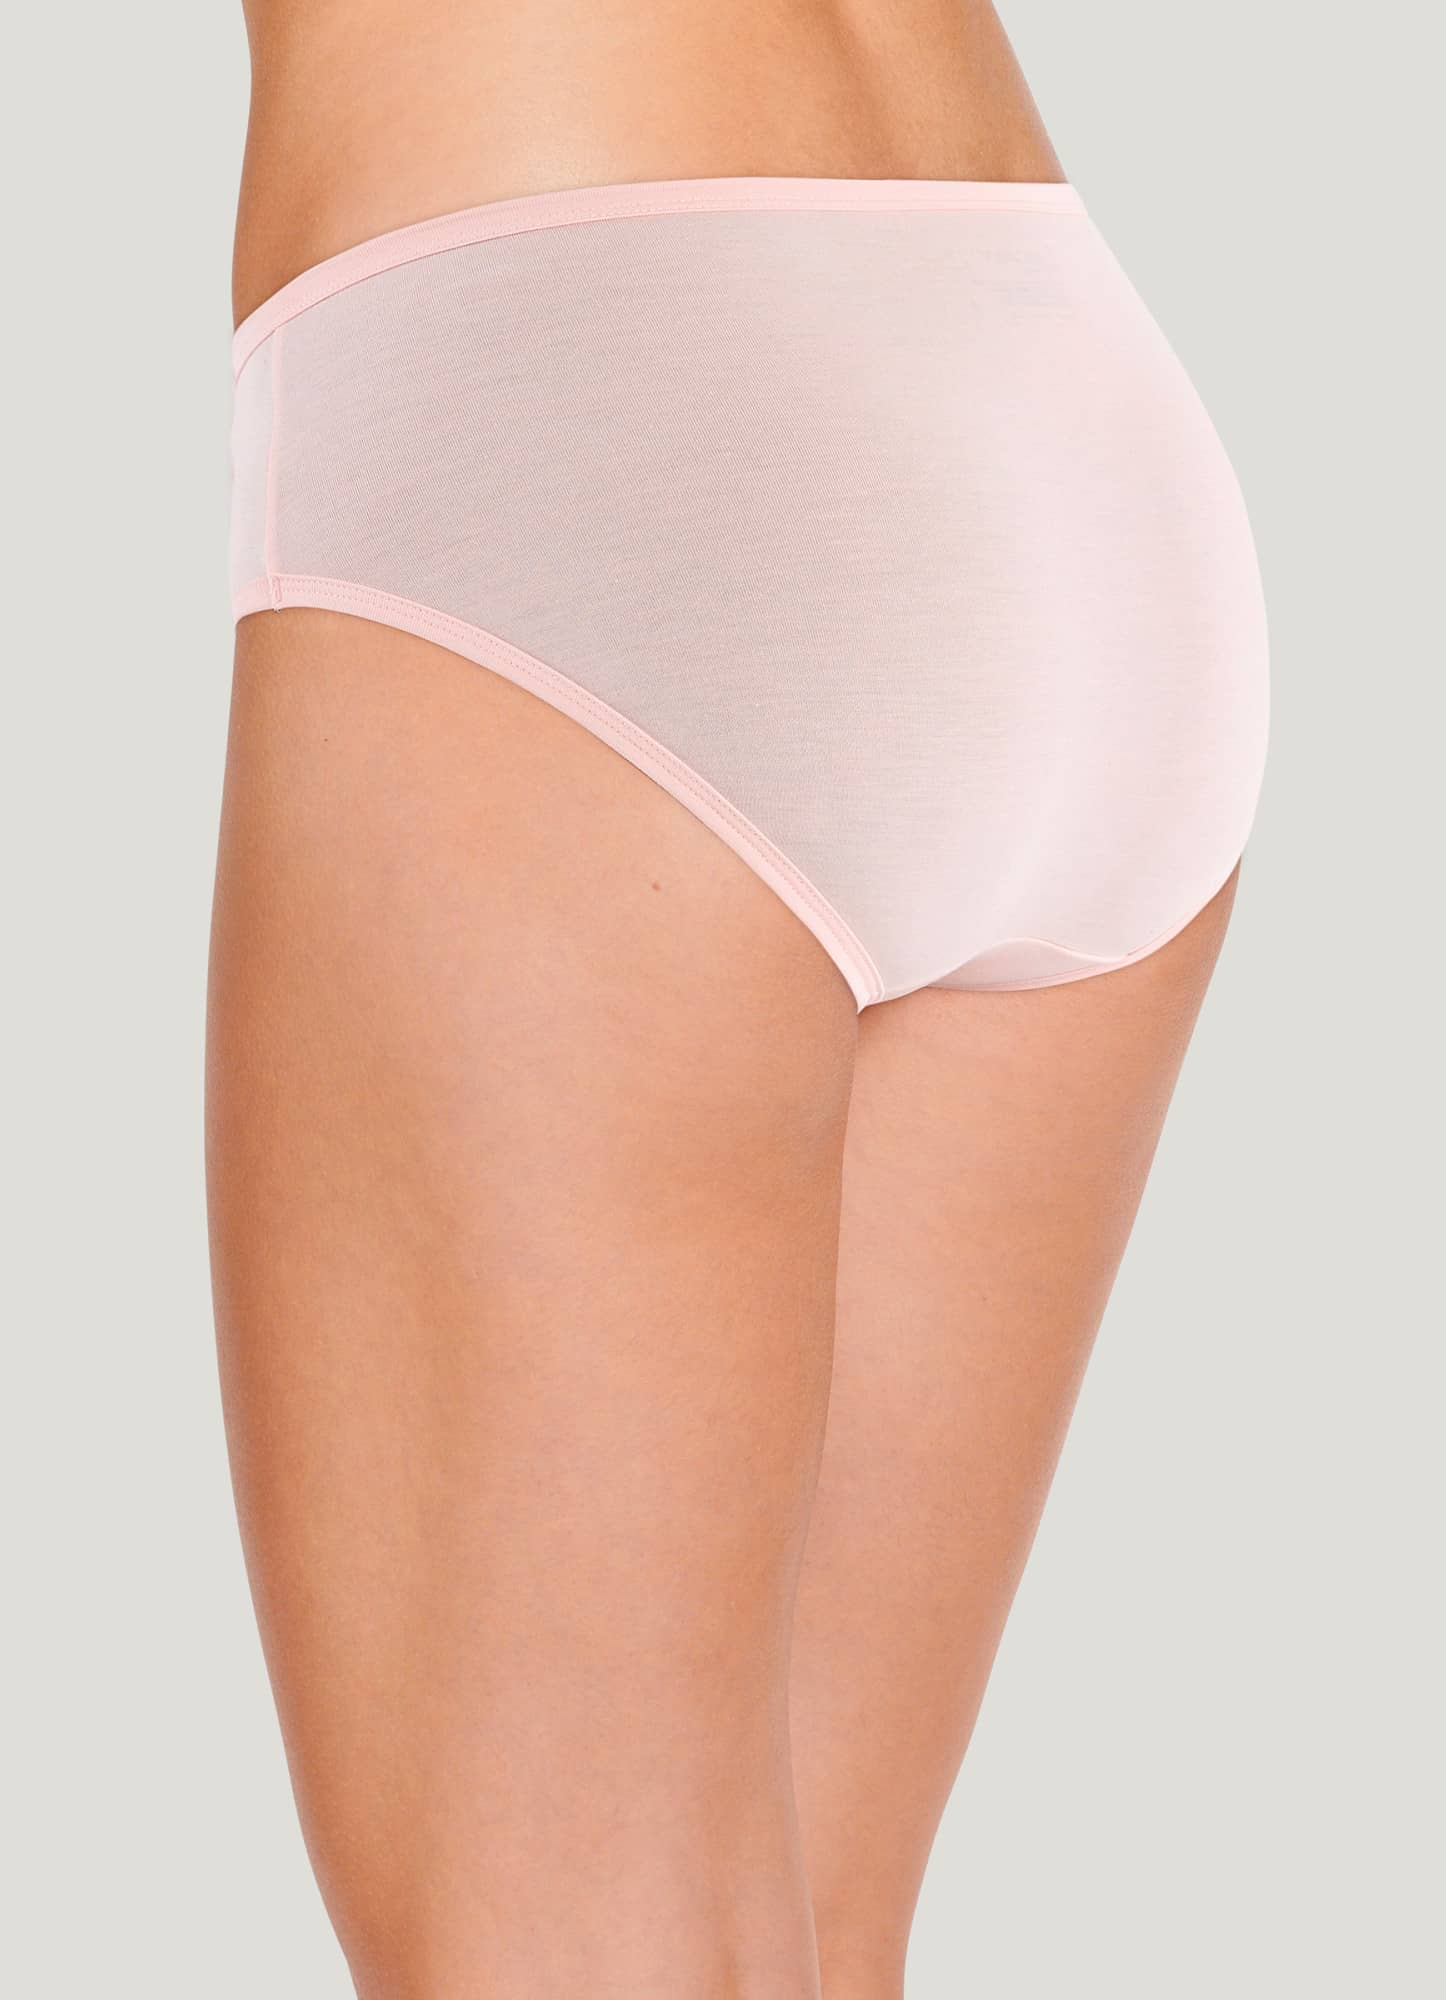 Jockey Women's Panties Supersoft Modal Bikinis Size 6 or 9 Set/3 MSRP $27.00